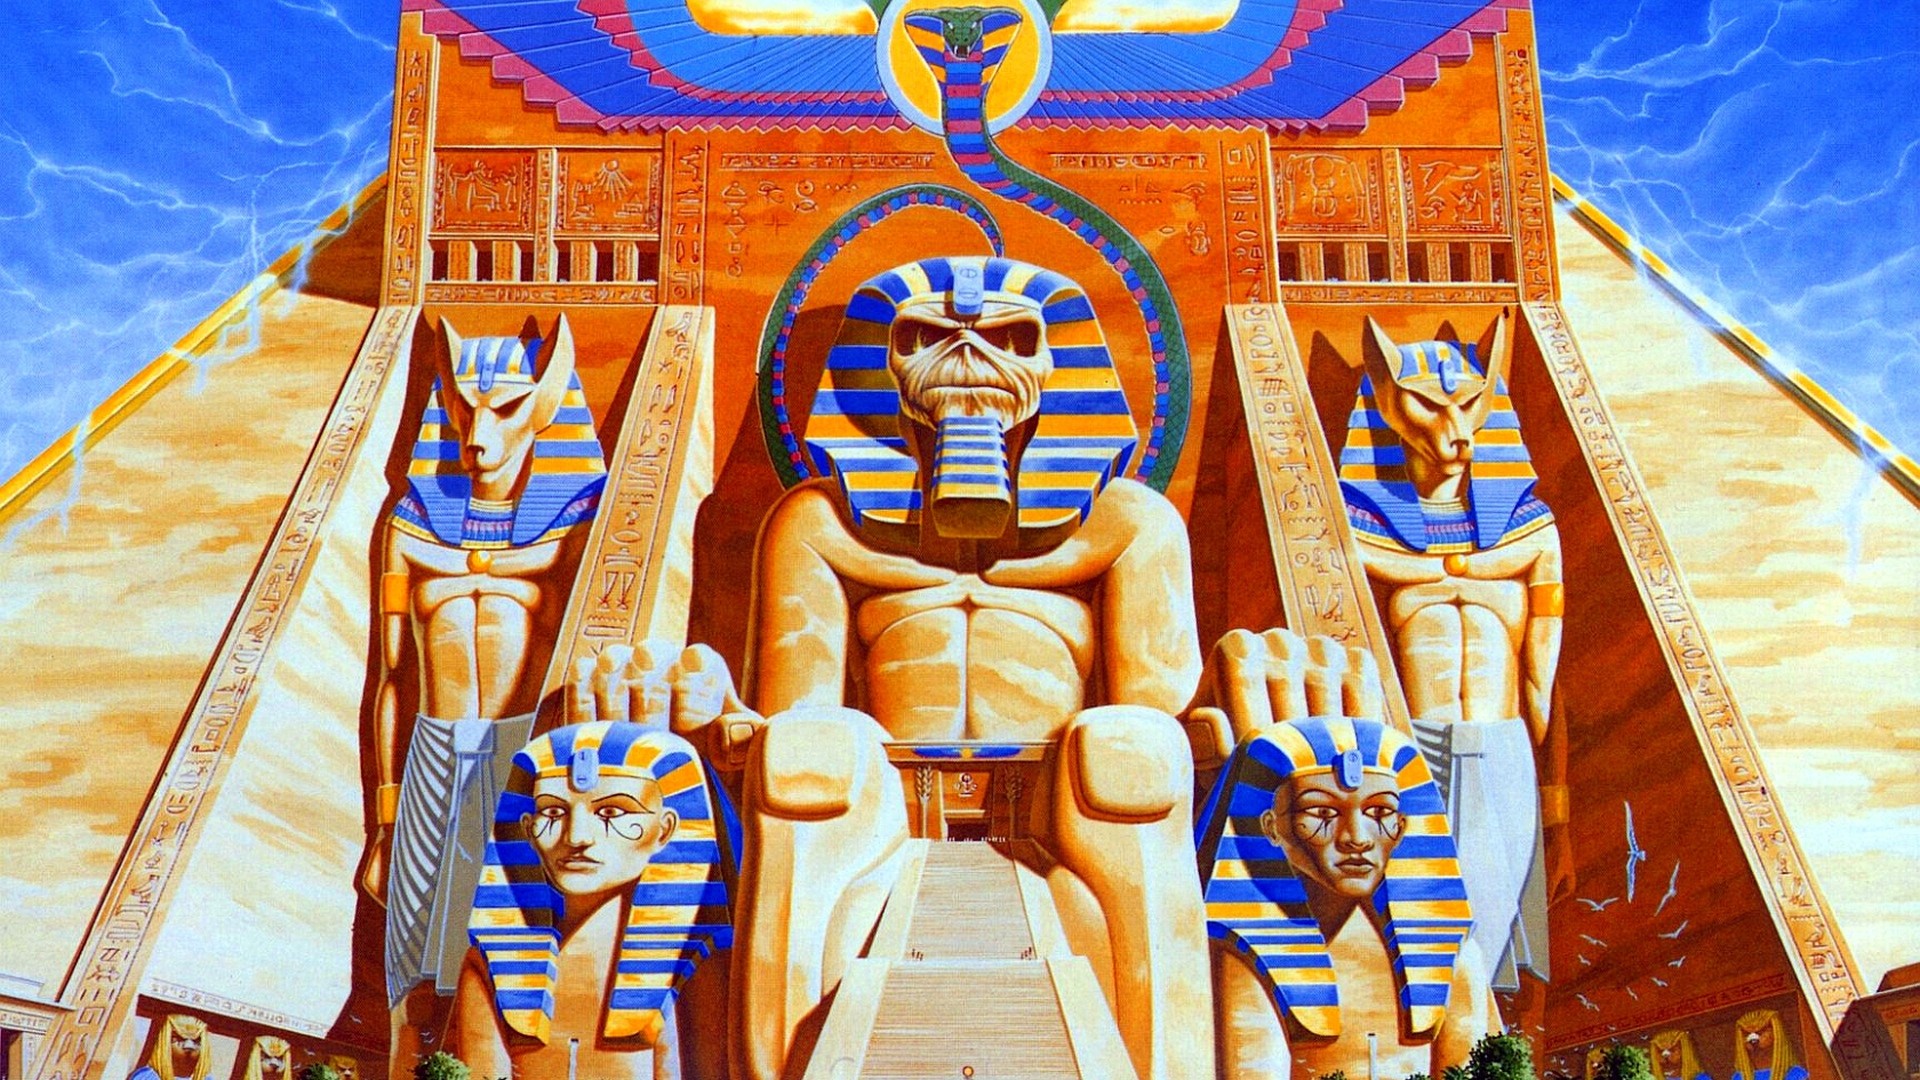 Album Covers Cover Art Pyramid Iron Maiden Music Egypt Sphinx Artwork Band Musician Eddie 1920x1080